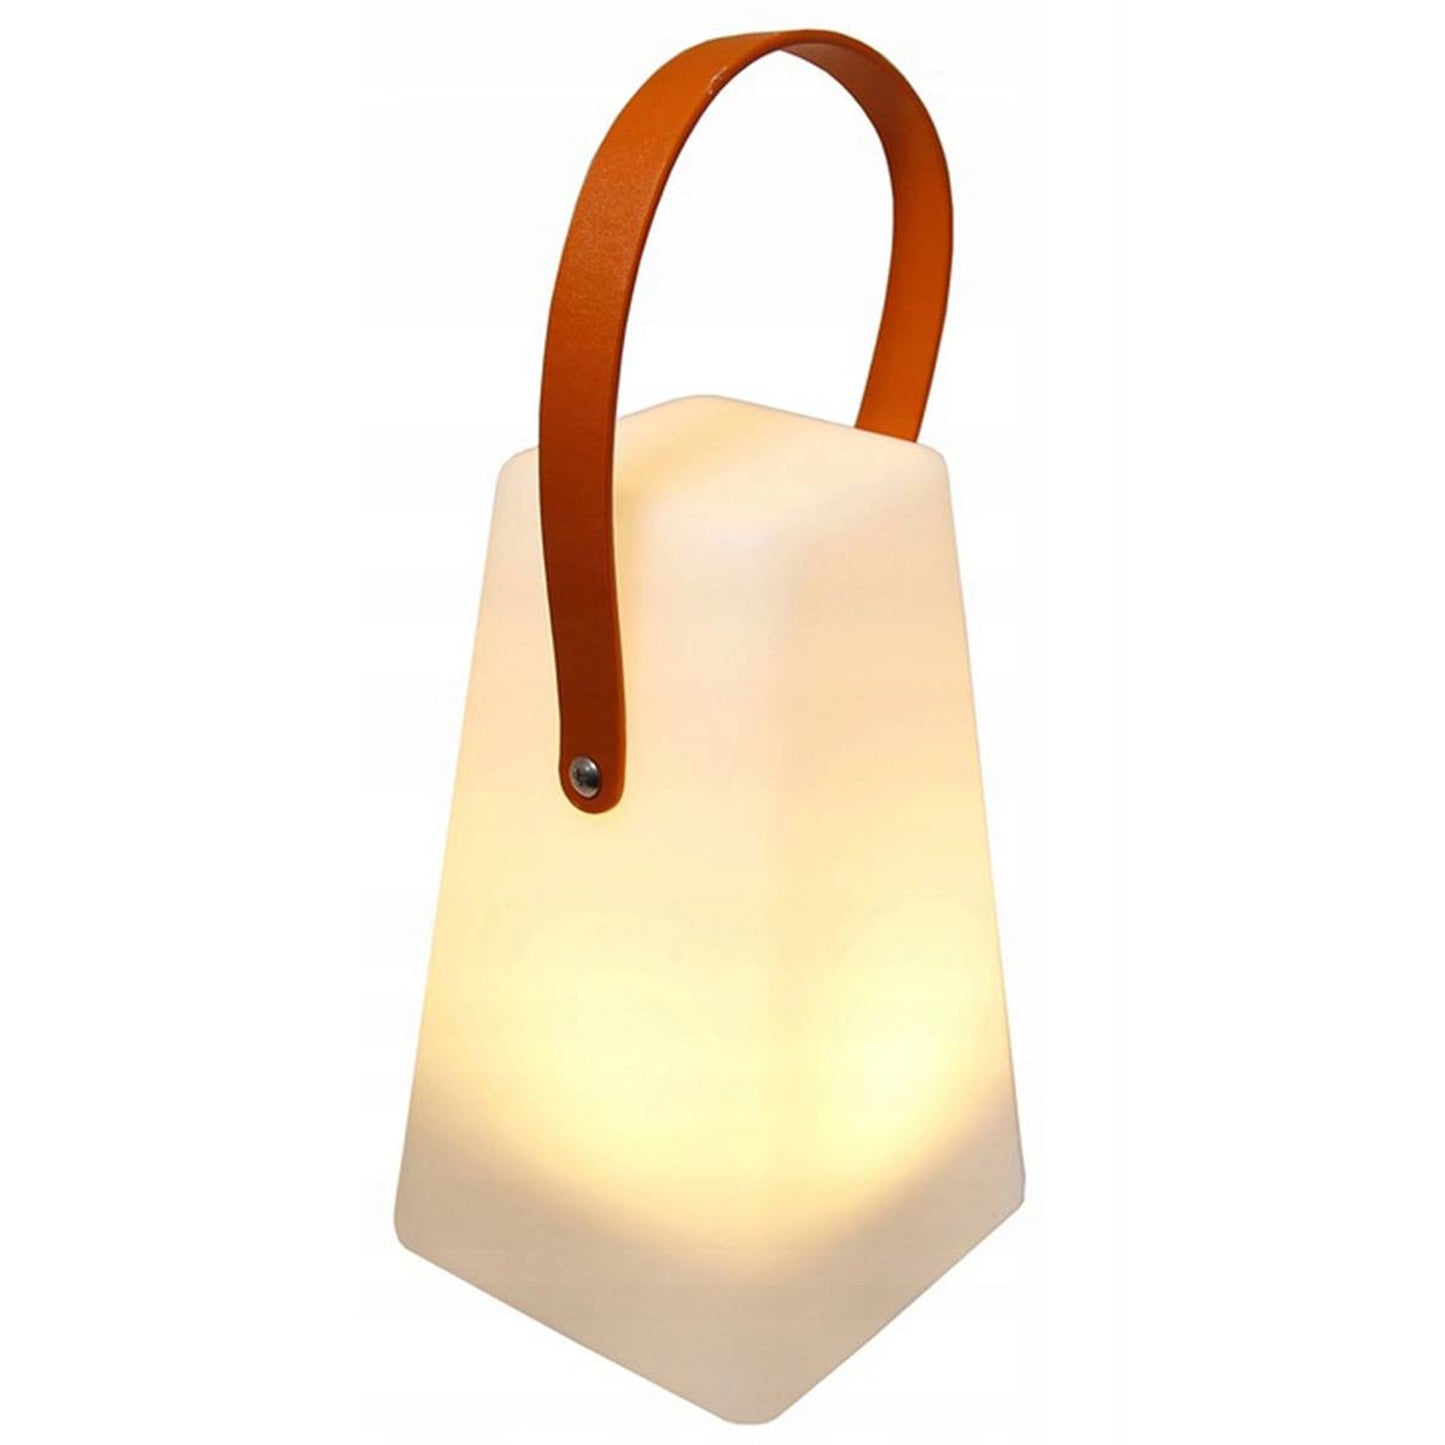 LED Lamp w/ leather handle